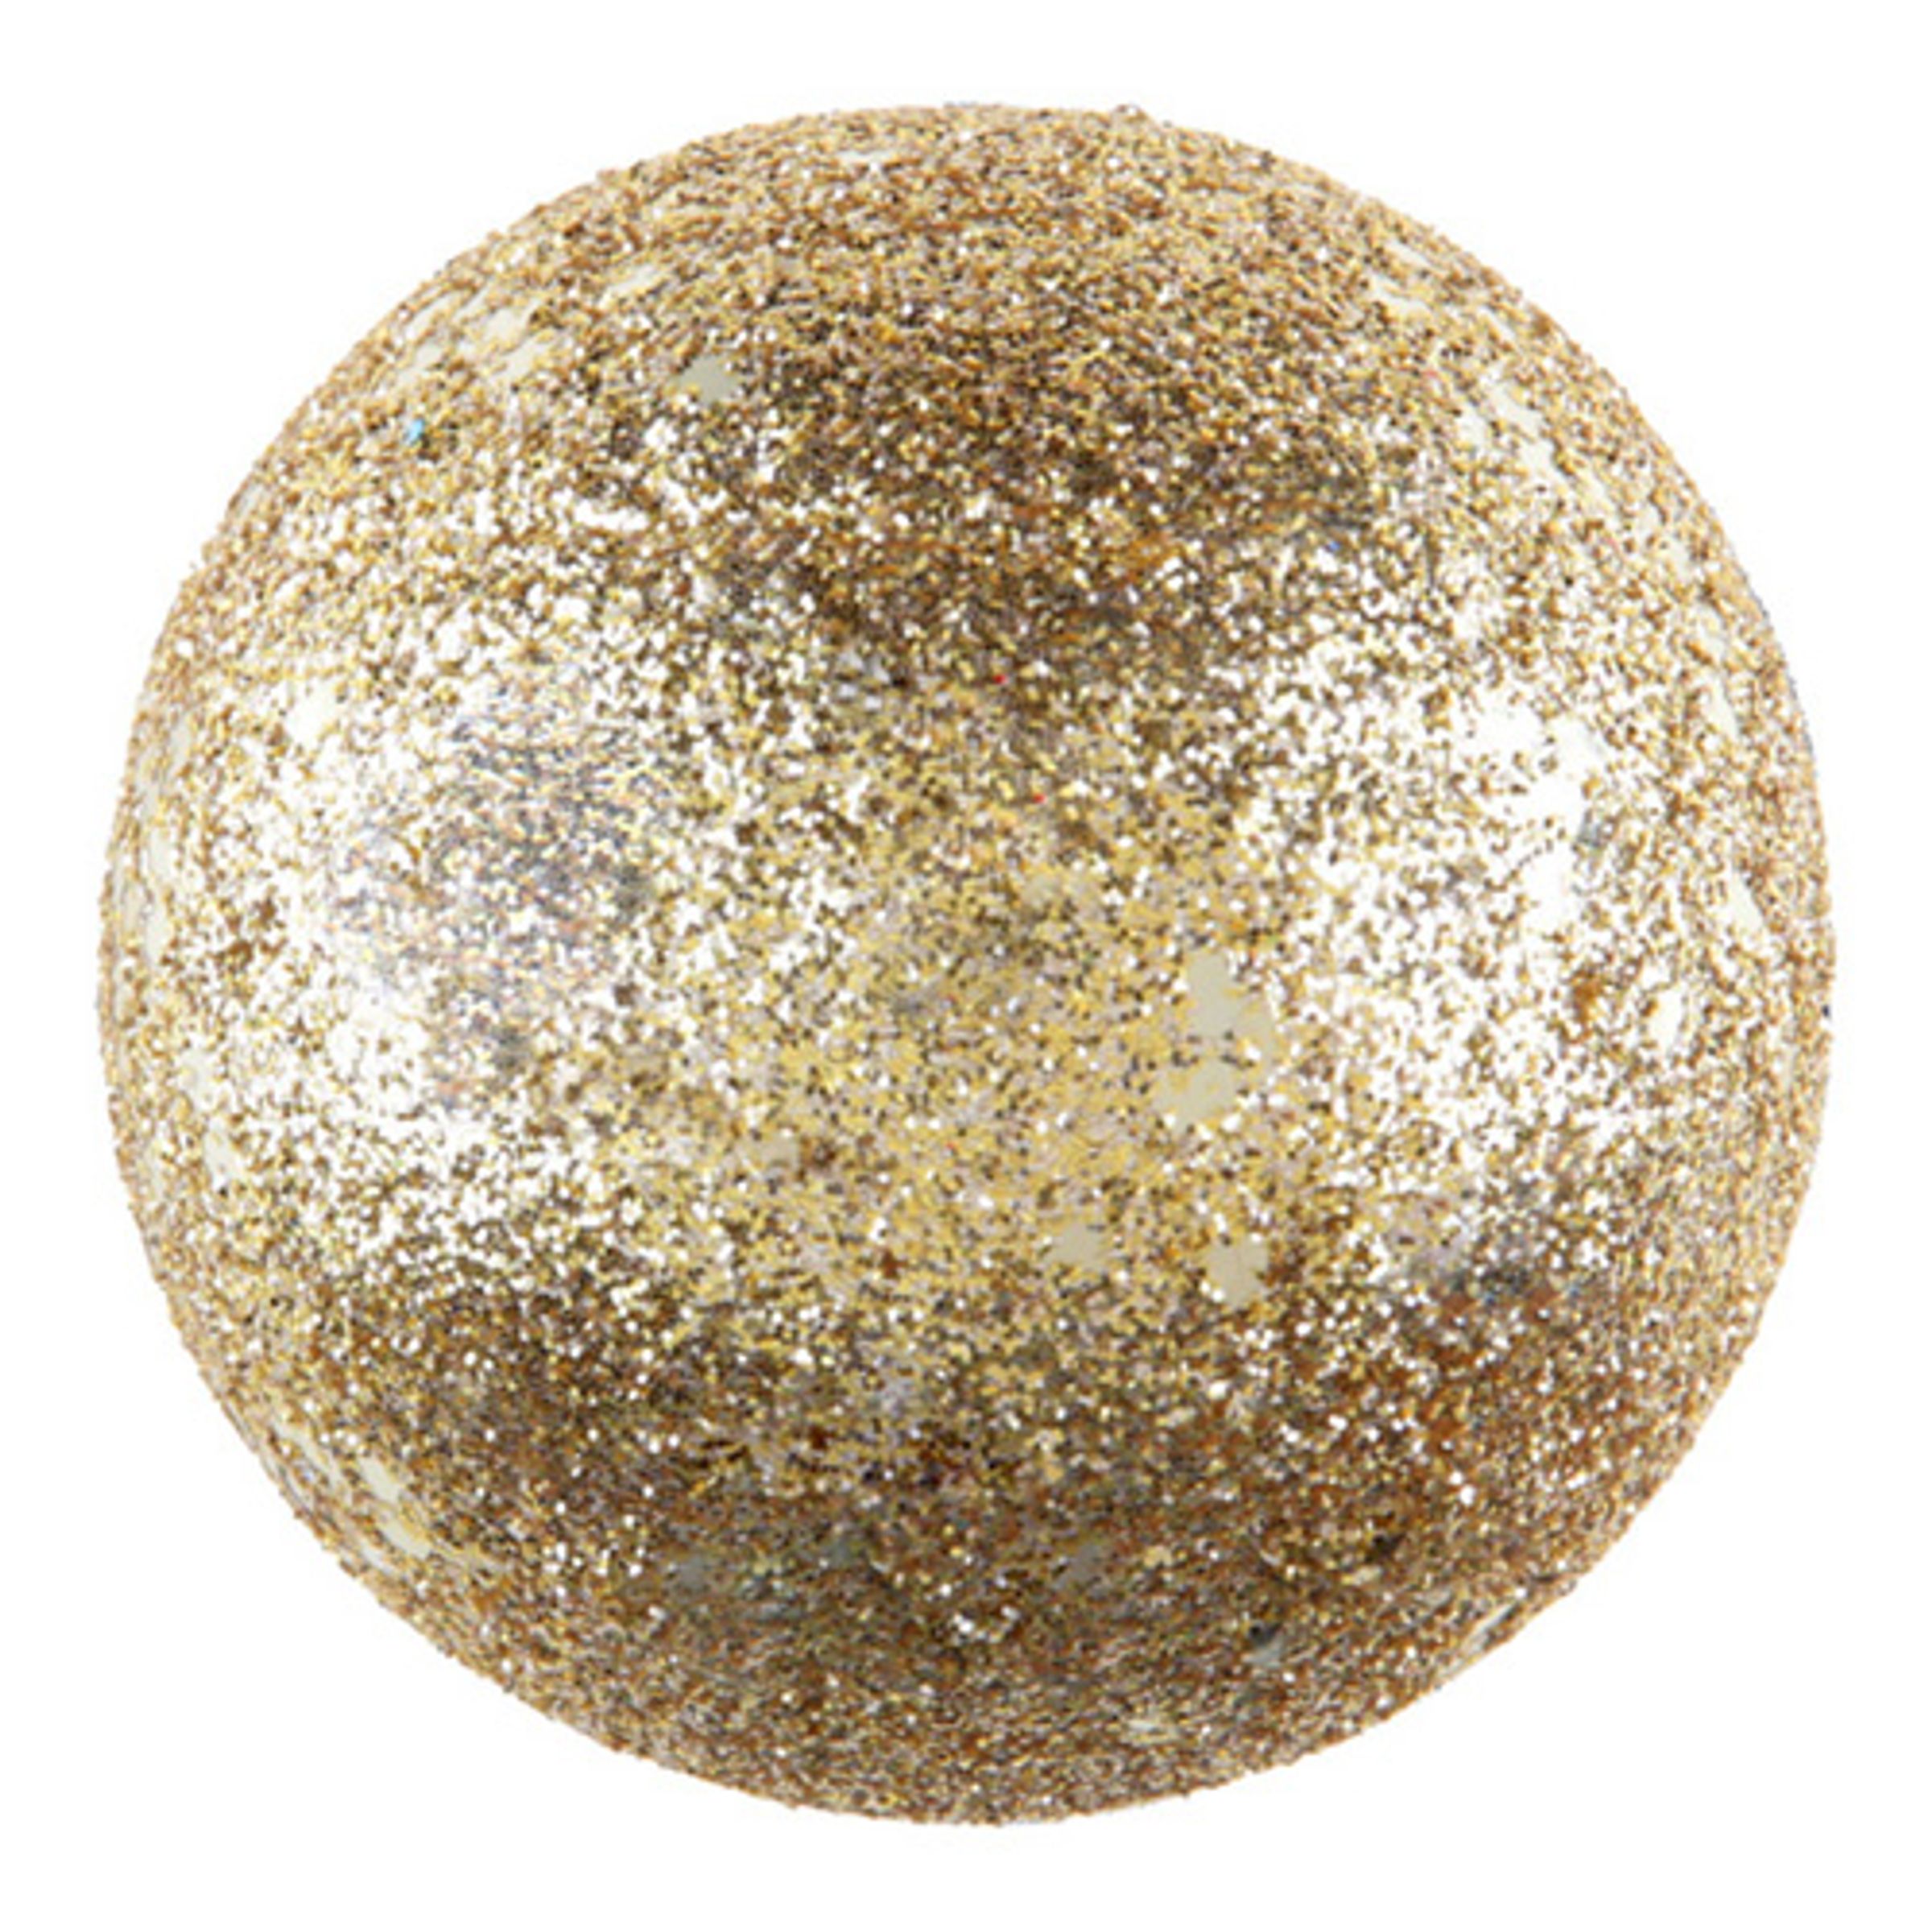 Dekorationsbollar Glitter/Guld - 10-pack